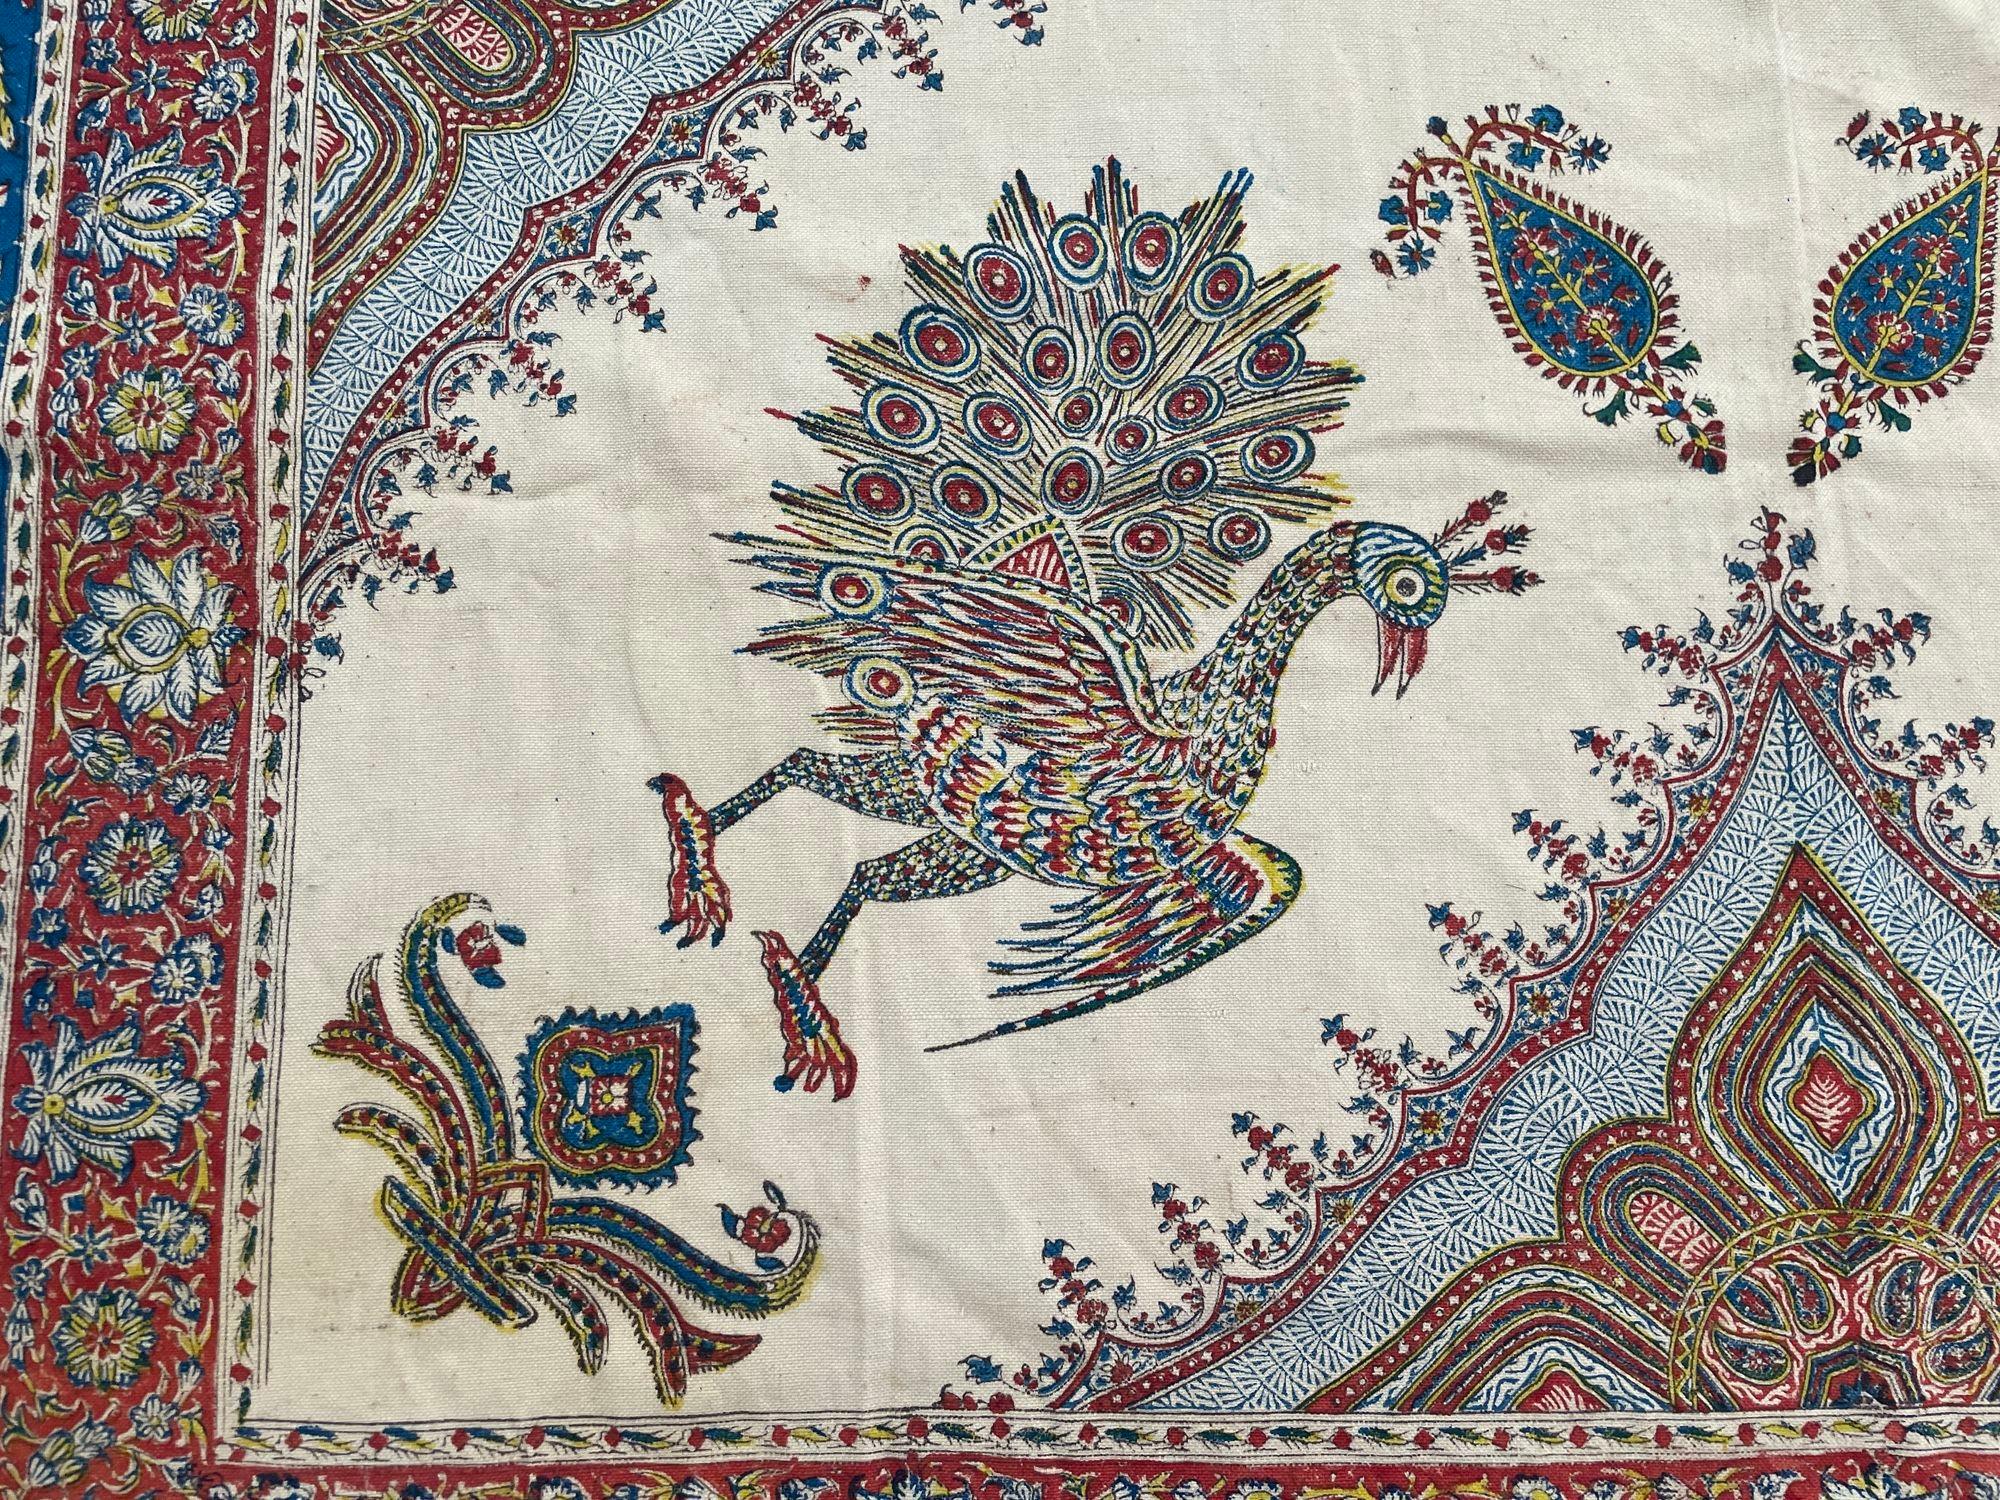 Asian Large Isfahan Ghalamkar Persian Paisley Textile Block Printed 1950s For Sale